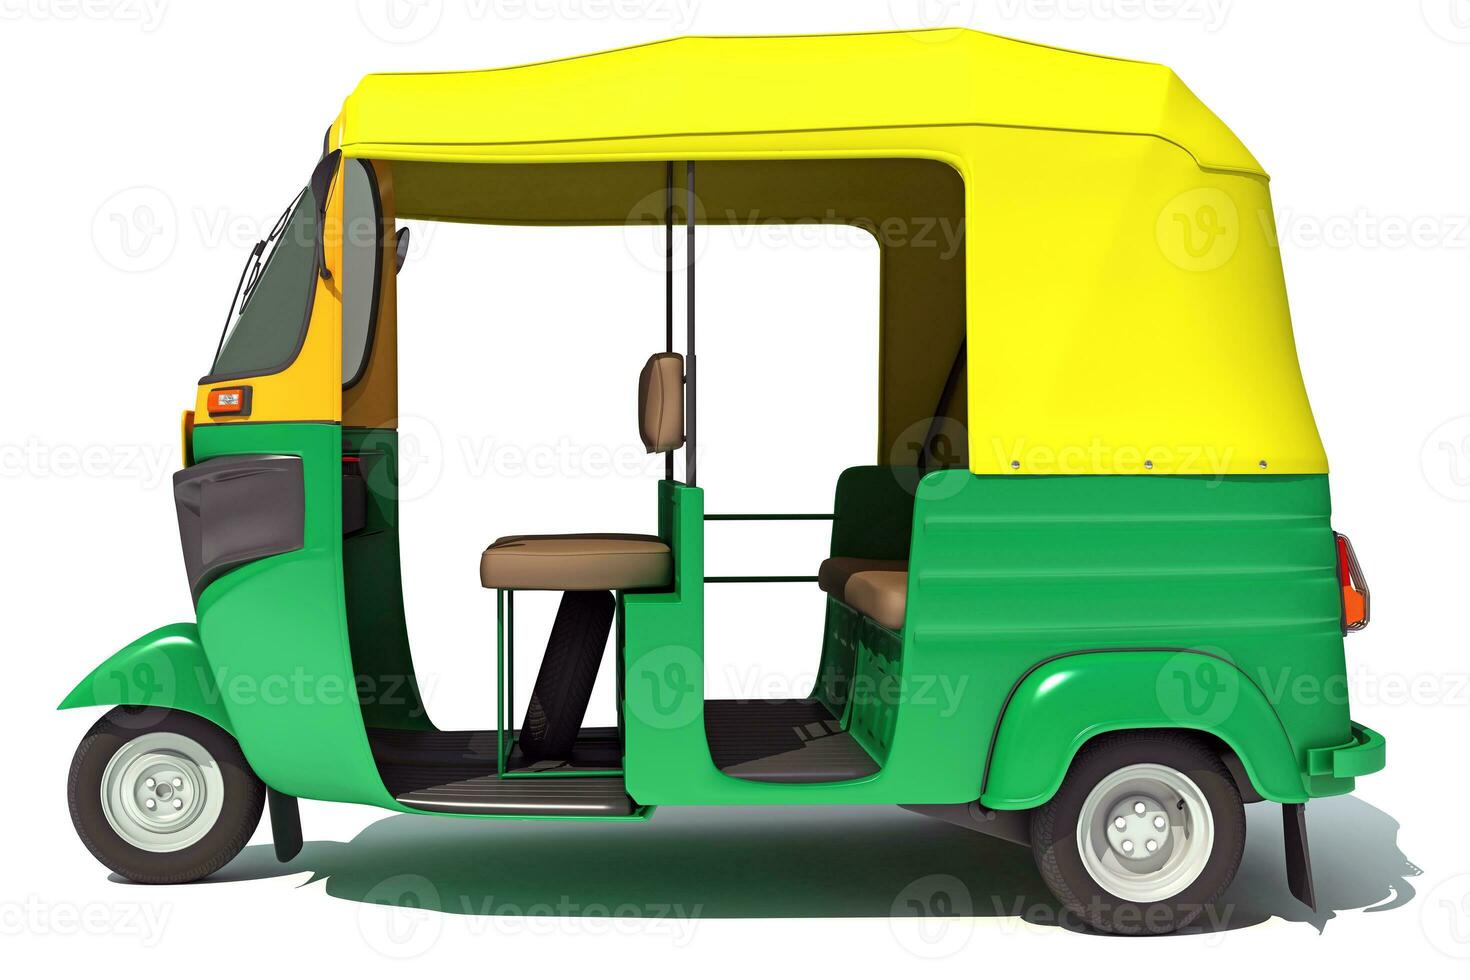 auto riksja bajaj tuktuk 3d renderen Aan wit achtergrond foto